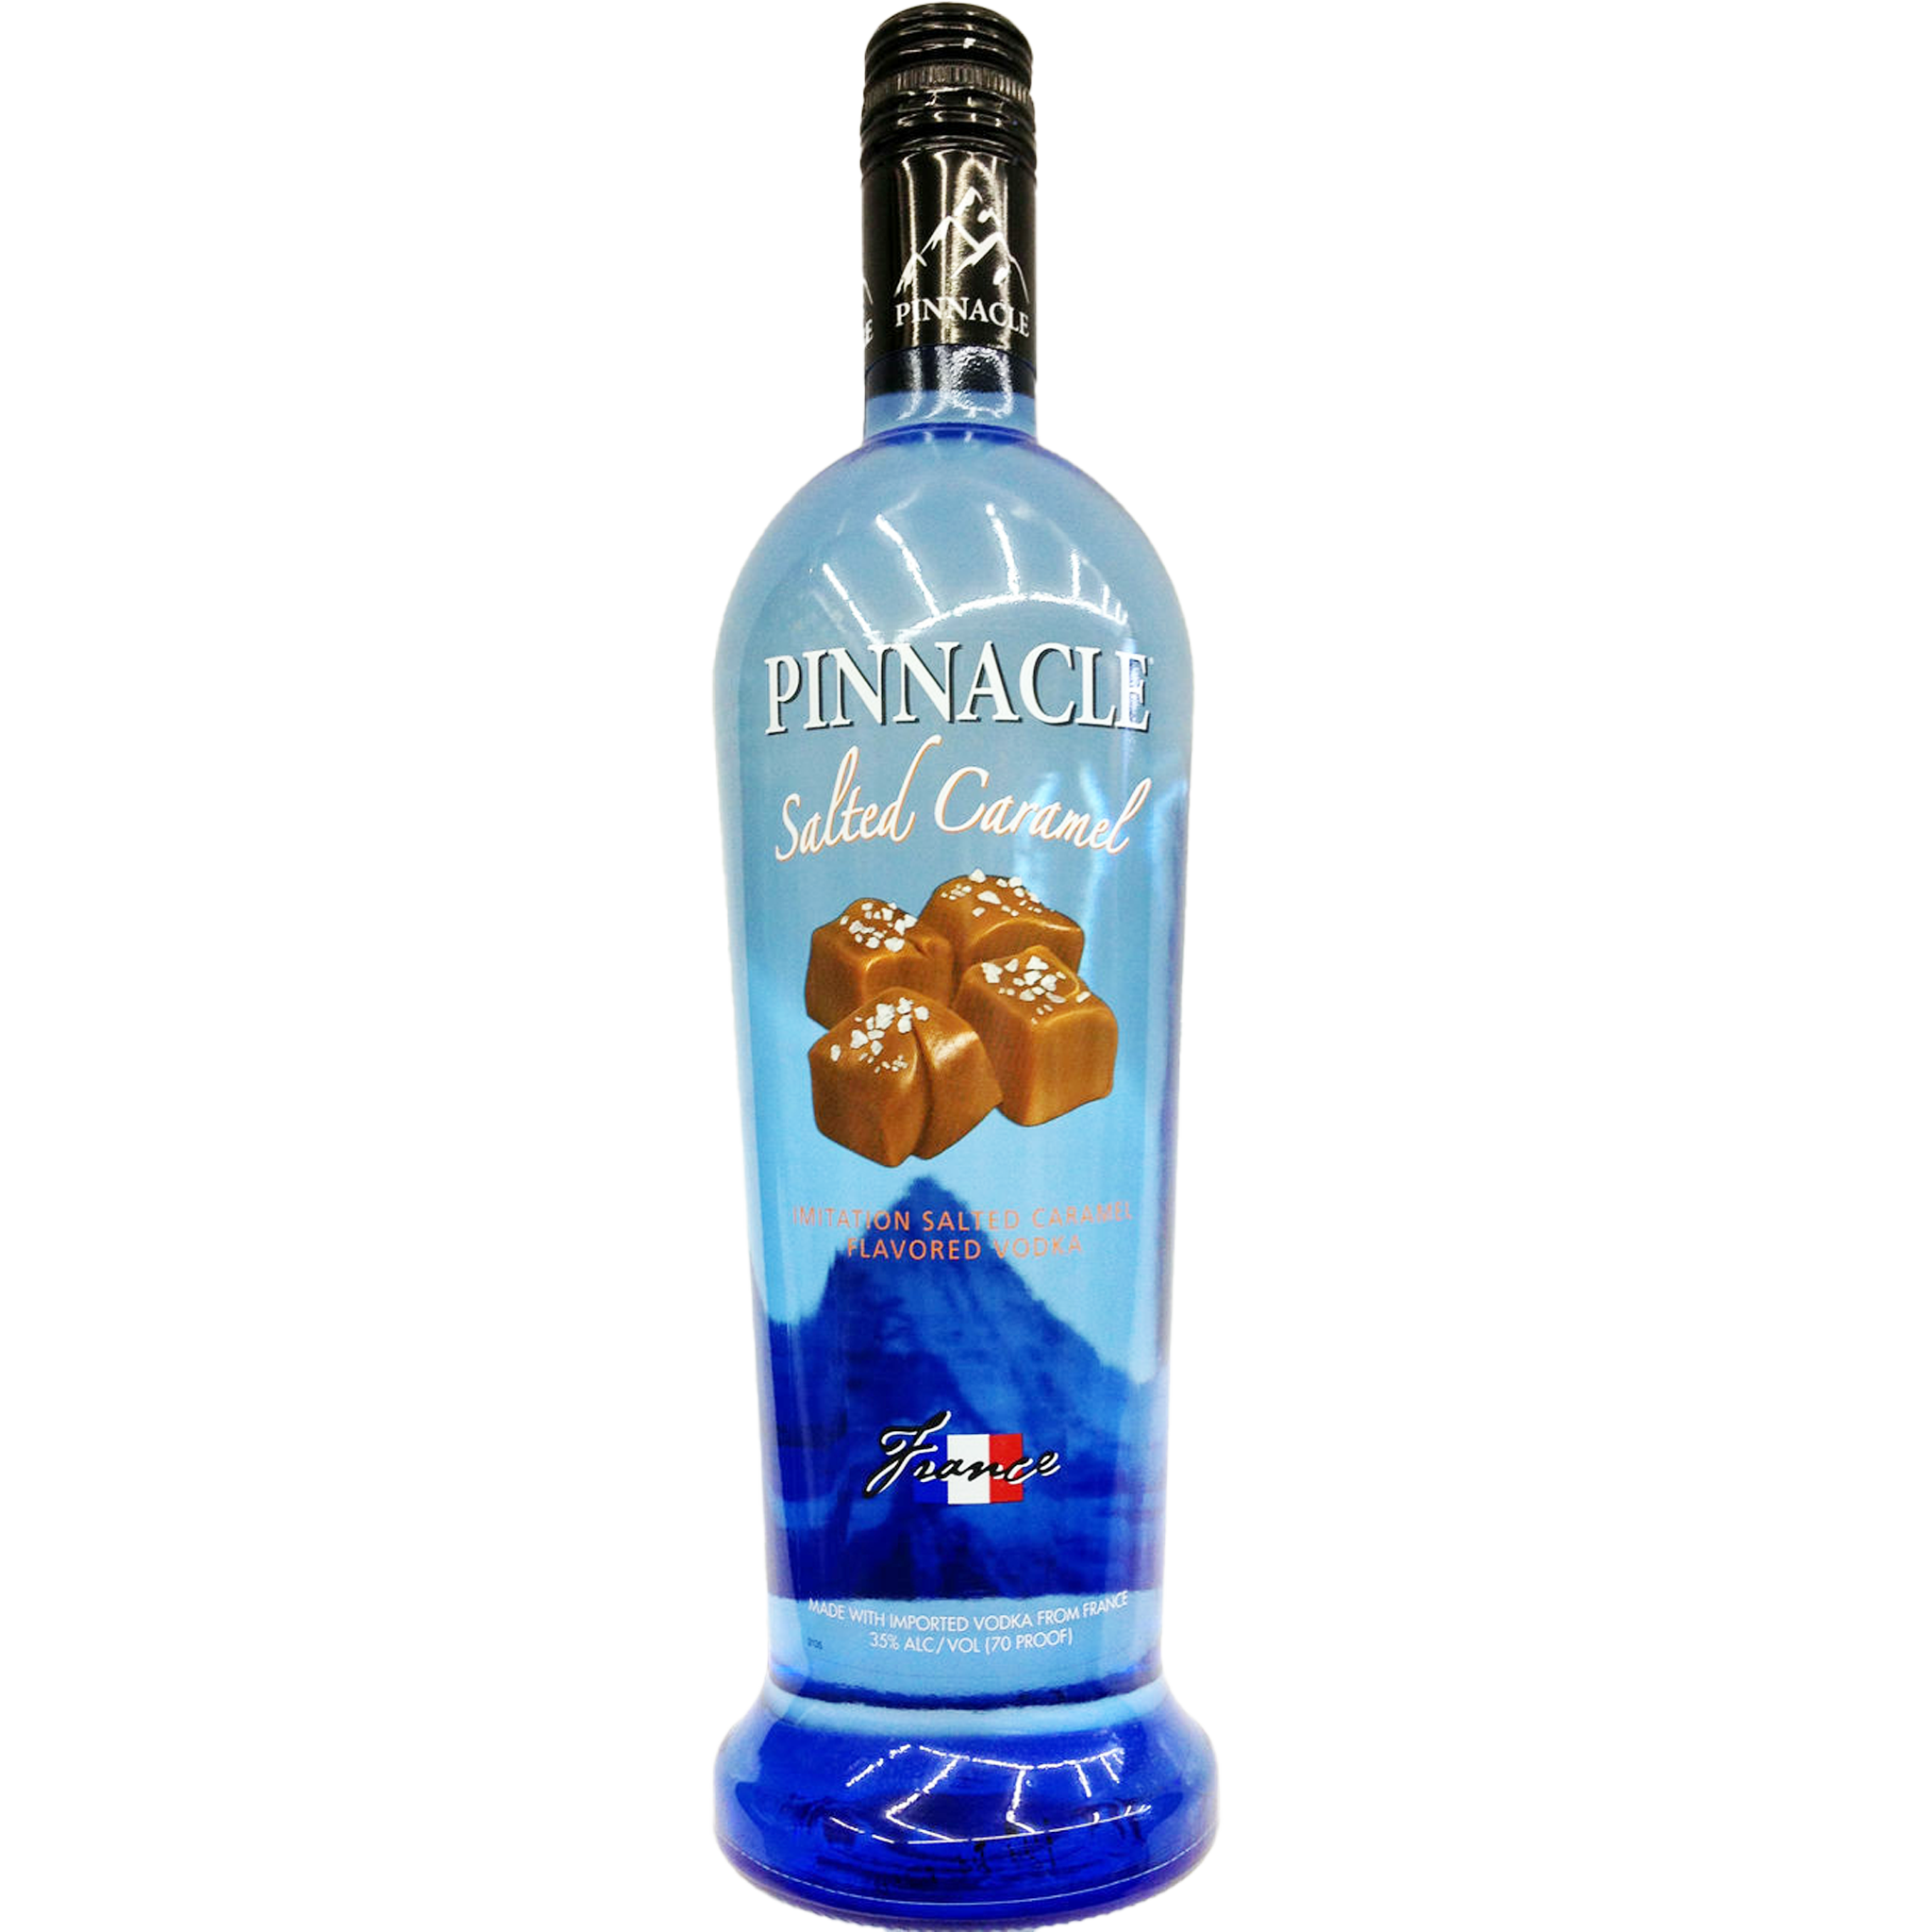 Pinnacle Salted Caramel Vodka